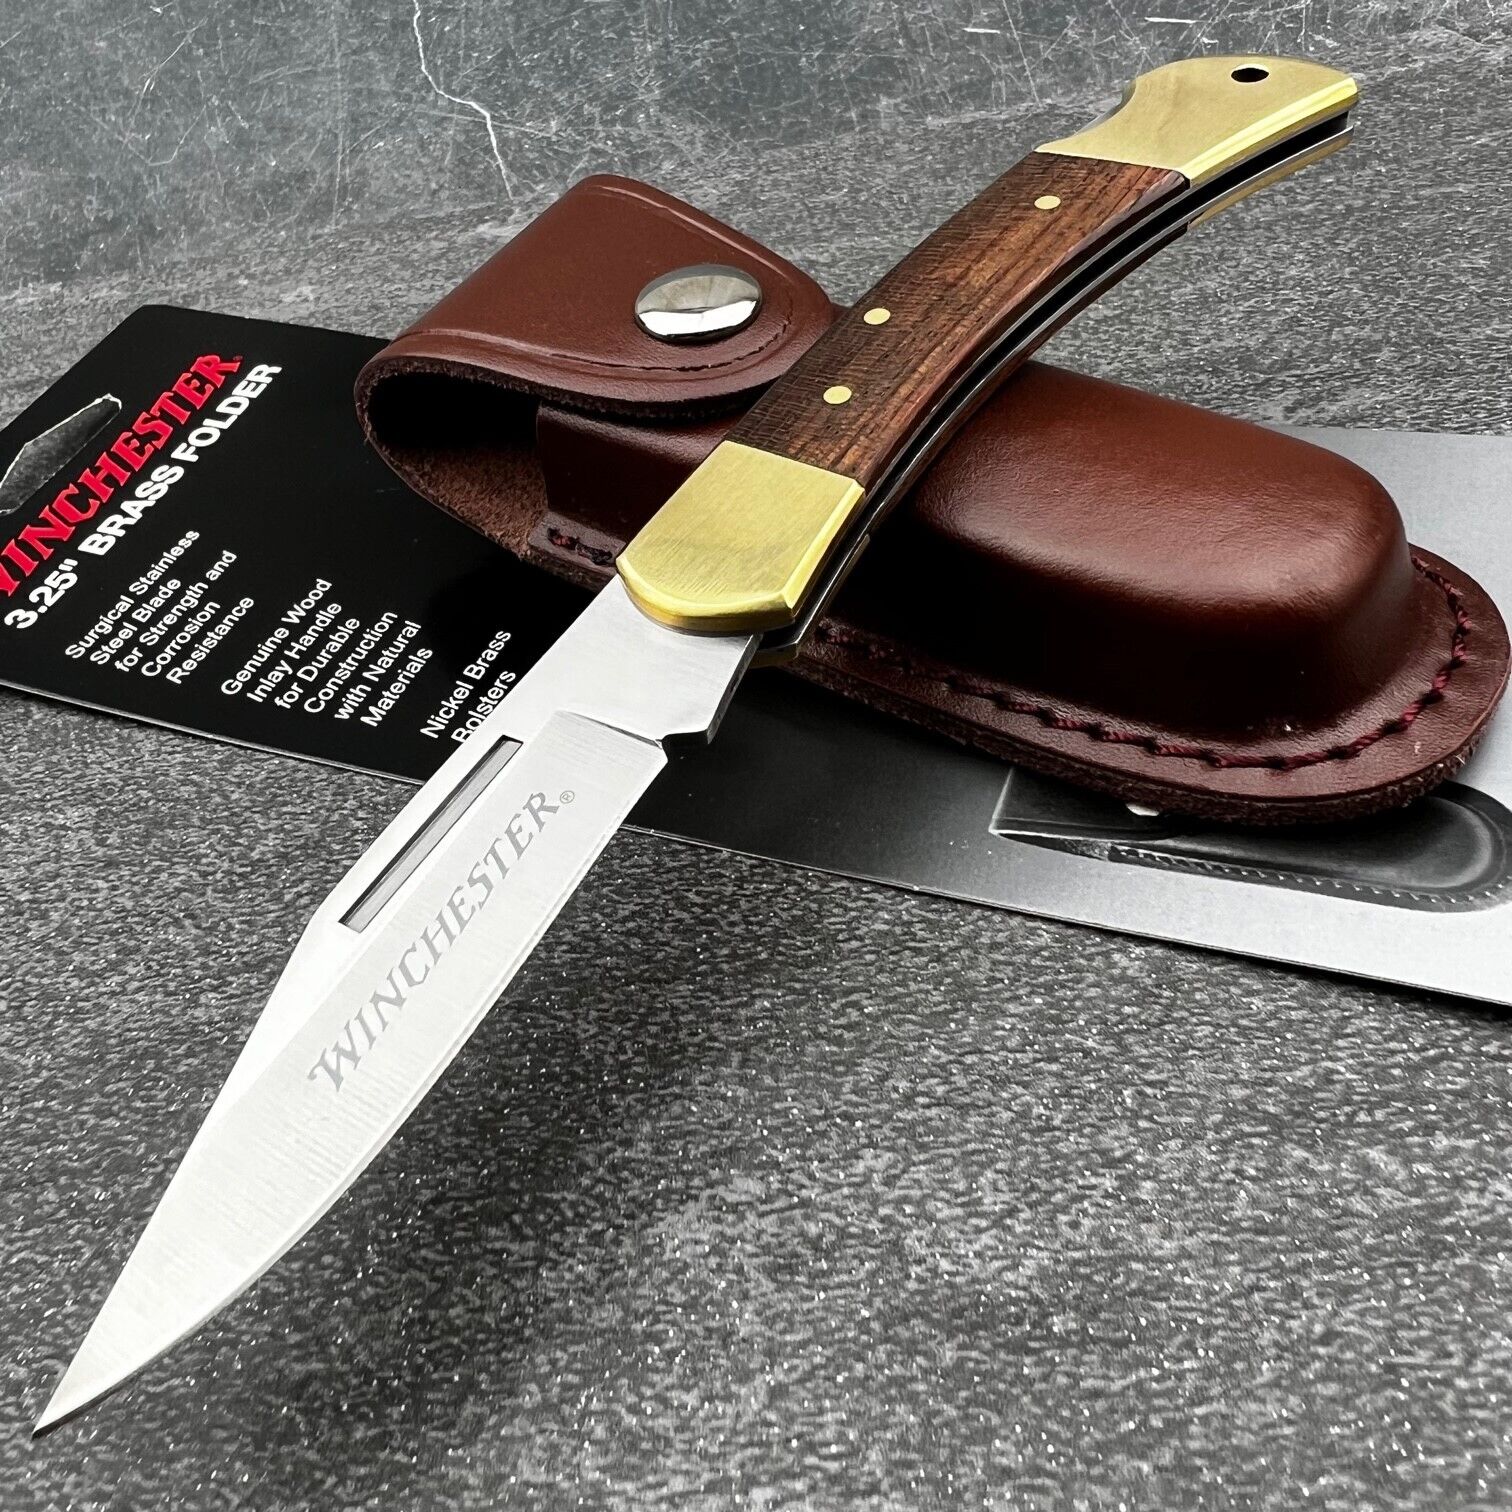 Winchester Brown Wood Handles Folding Lockback Pocket Knife with Leather Sheath